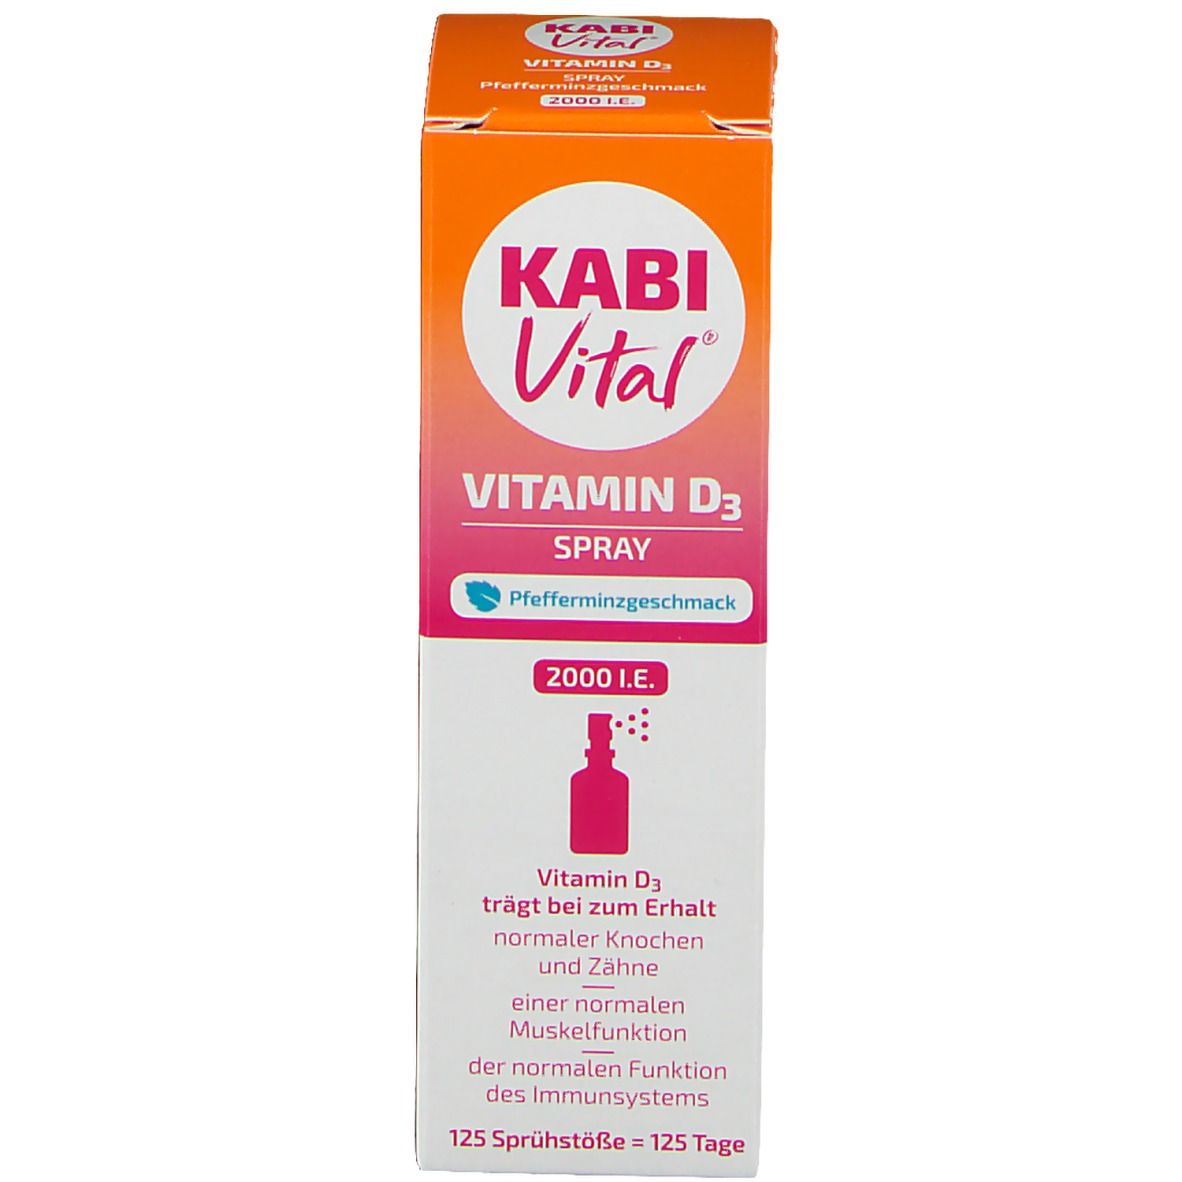 KabiVital Vitamin D3 Spray 2000 I.E. Pfefferminz